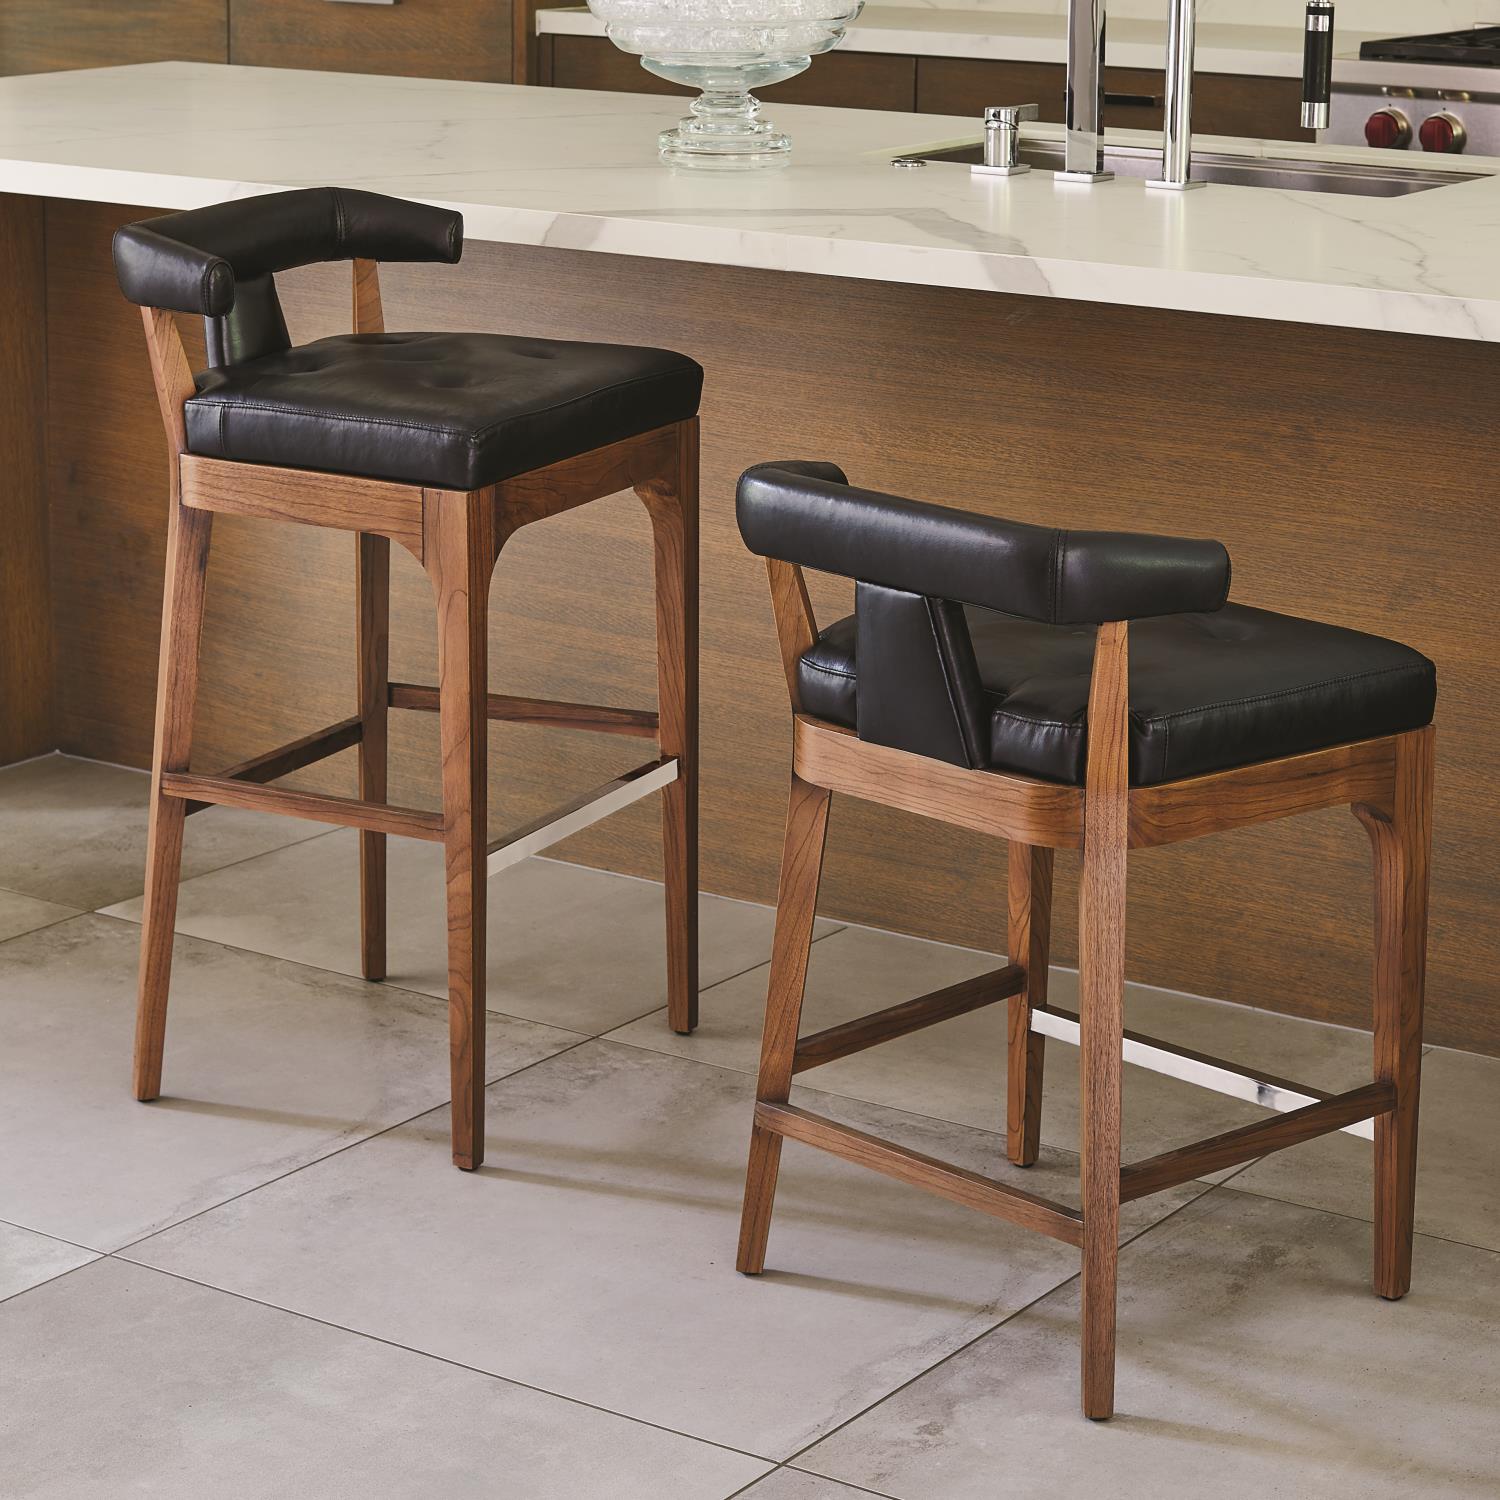 Moderno Bar Stool - Black Marble Leather - Grats Decor Interior Design & Build Inc.